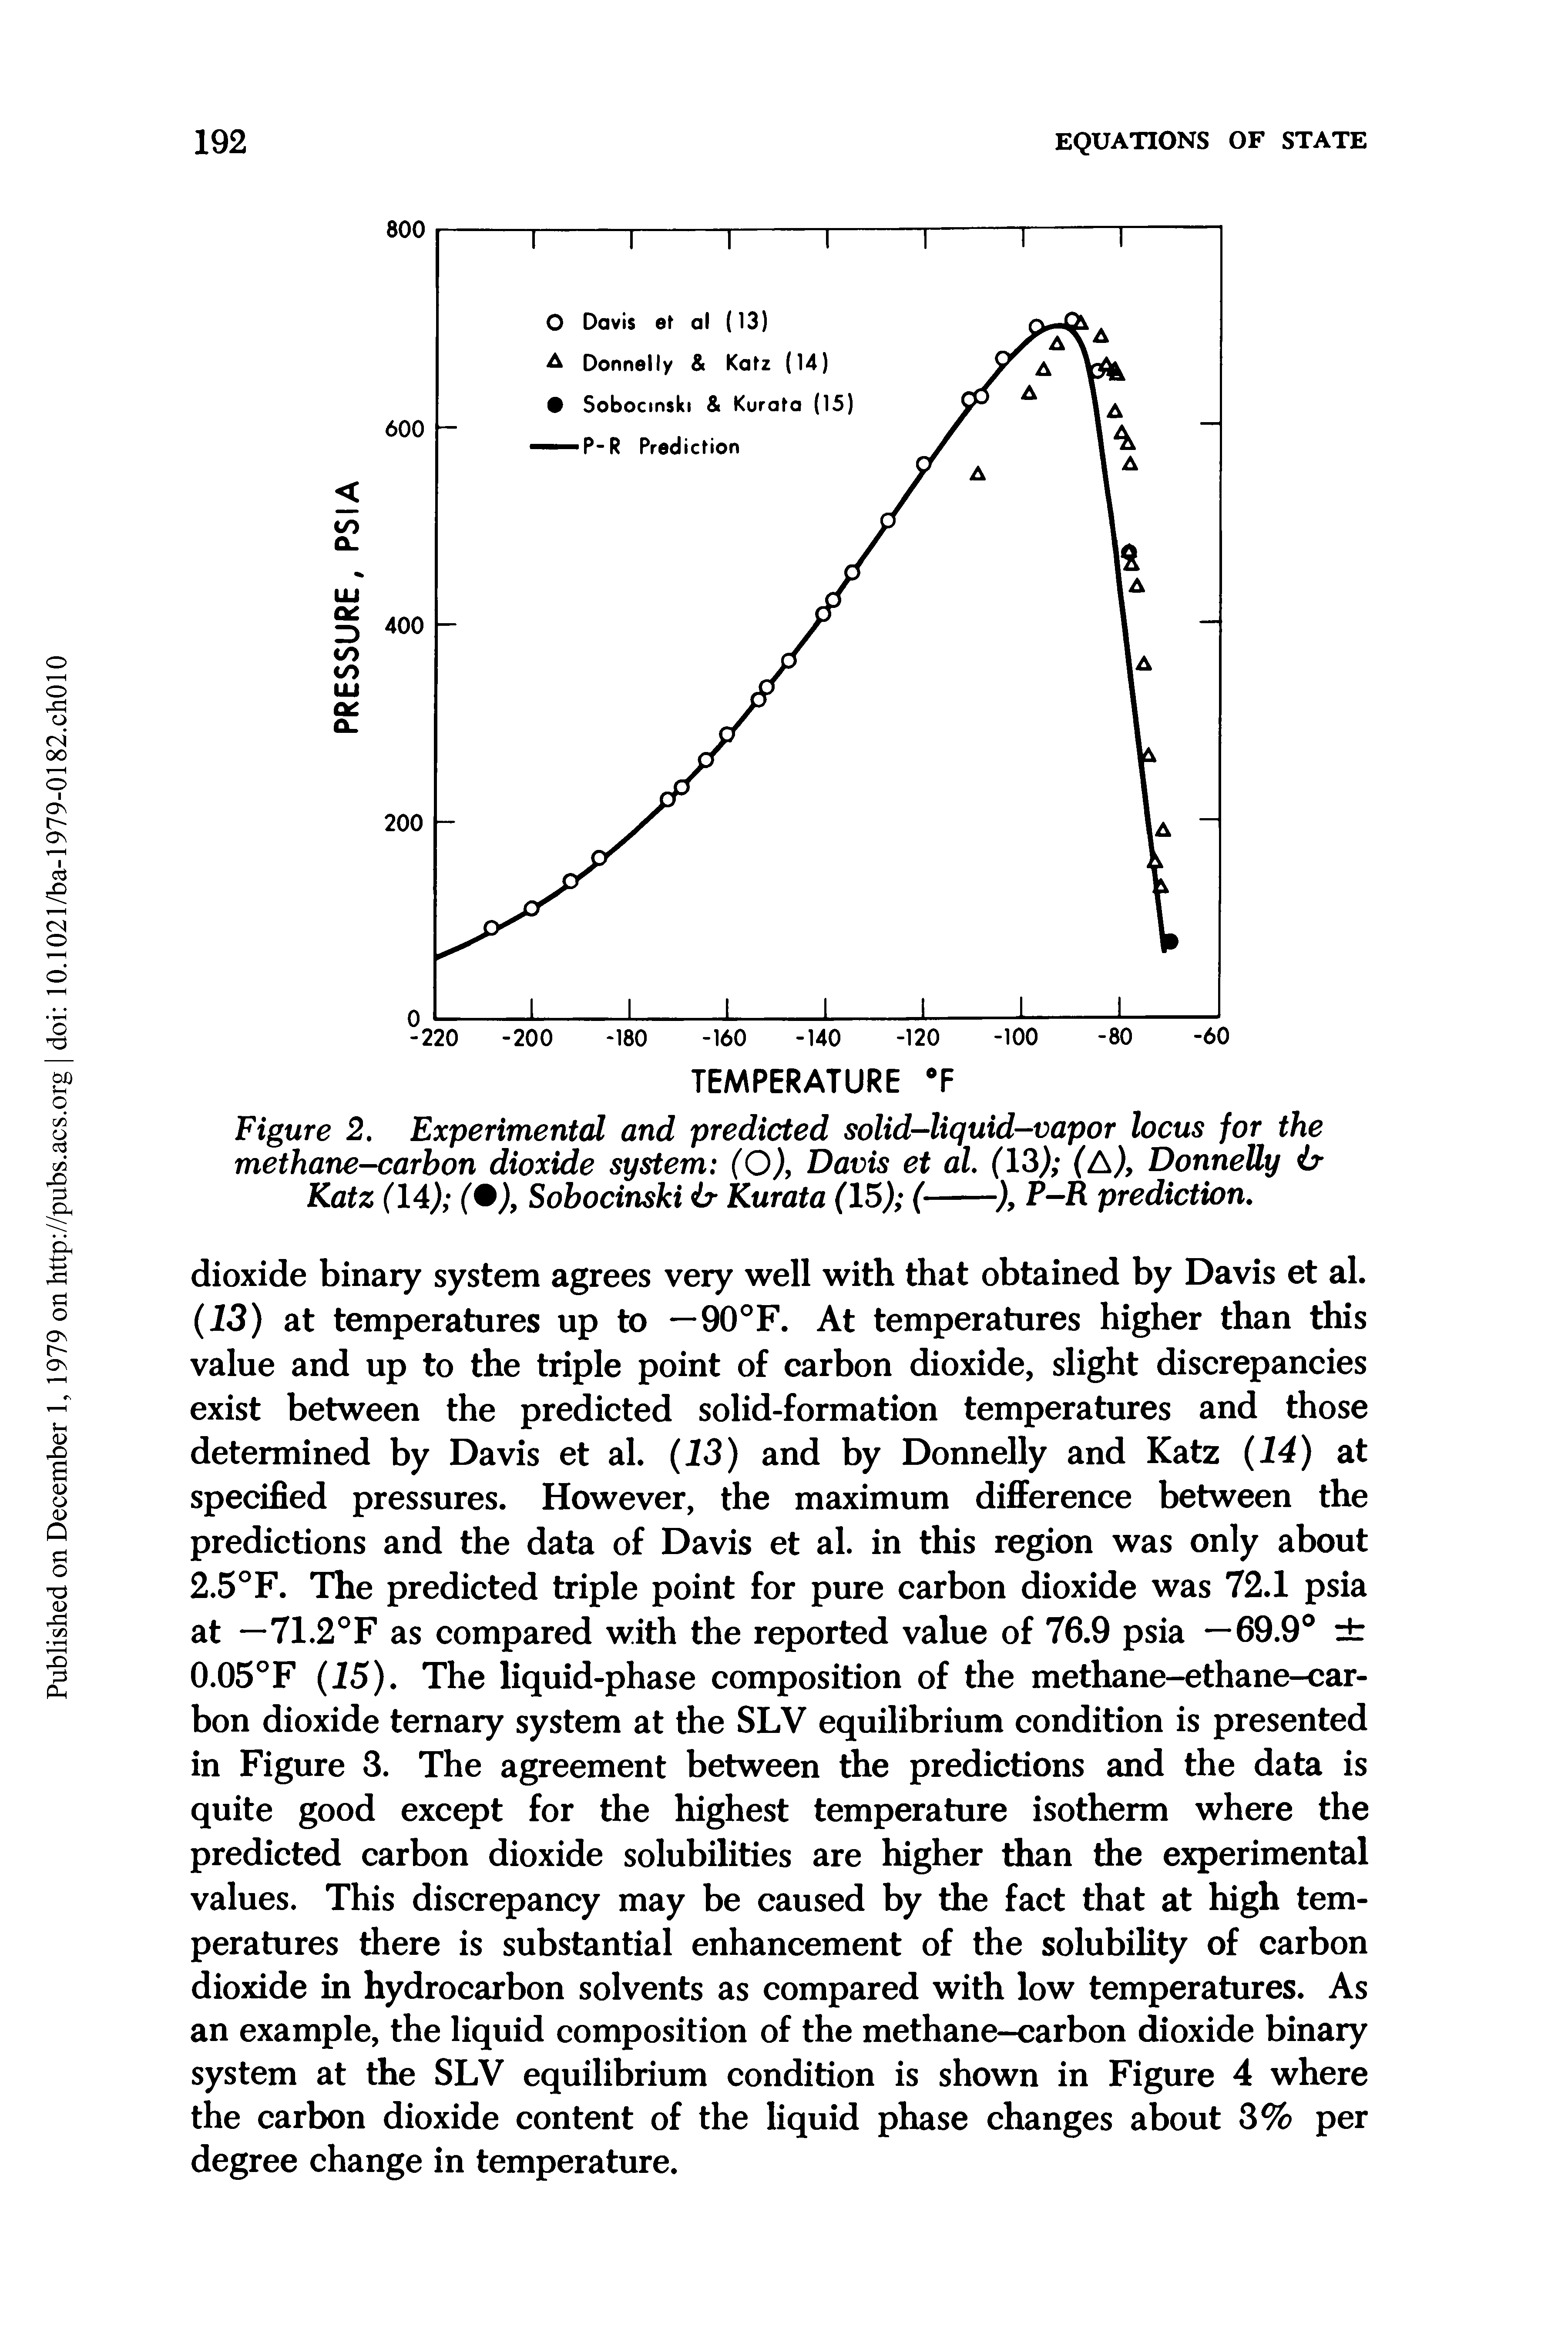 Figure 2. Experimental and predicted solid-liquid-vapor locus for the methane-carbon dioxide system (O), Davis et al. (13) (A), Donnelly ir Katz (14) ( ), Sobocinski 6- Kurata (15) (-), P-R prediction.